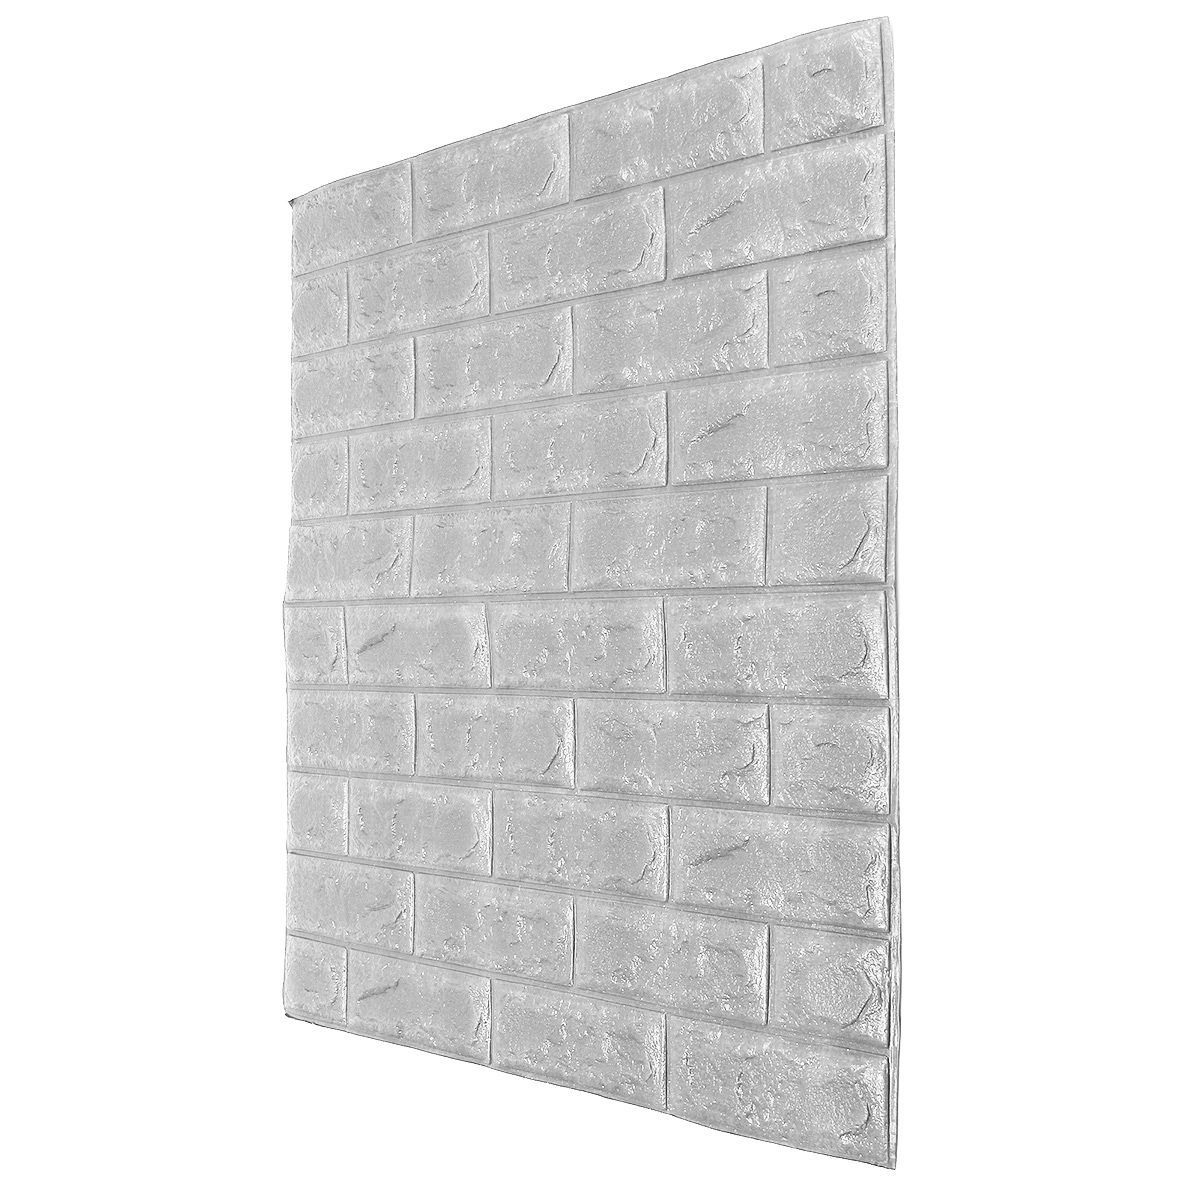 3D-Brick-Pattern-Wallpaper-Bedroom-Living-Room-Modern-Wall-Sticker-TV-Background-Decor-1195902